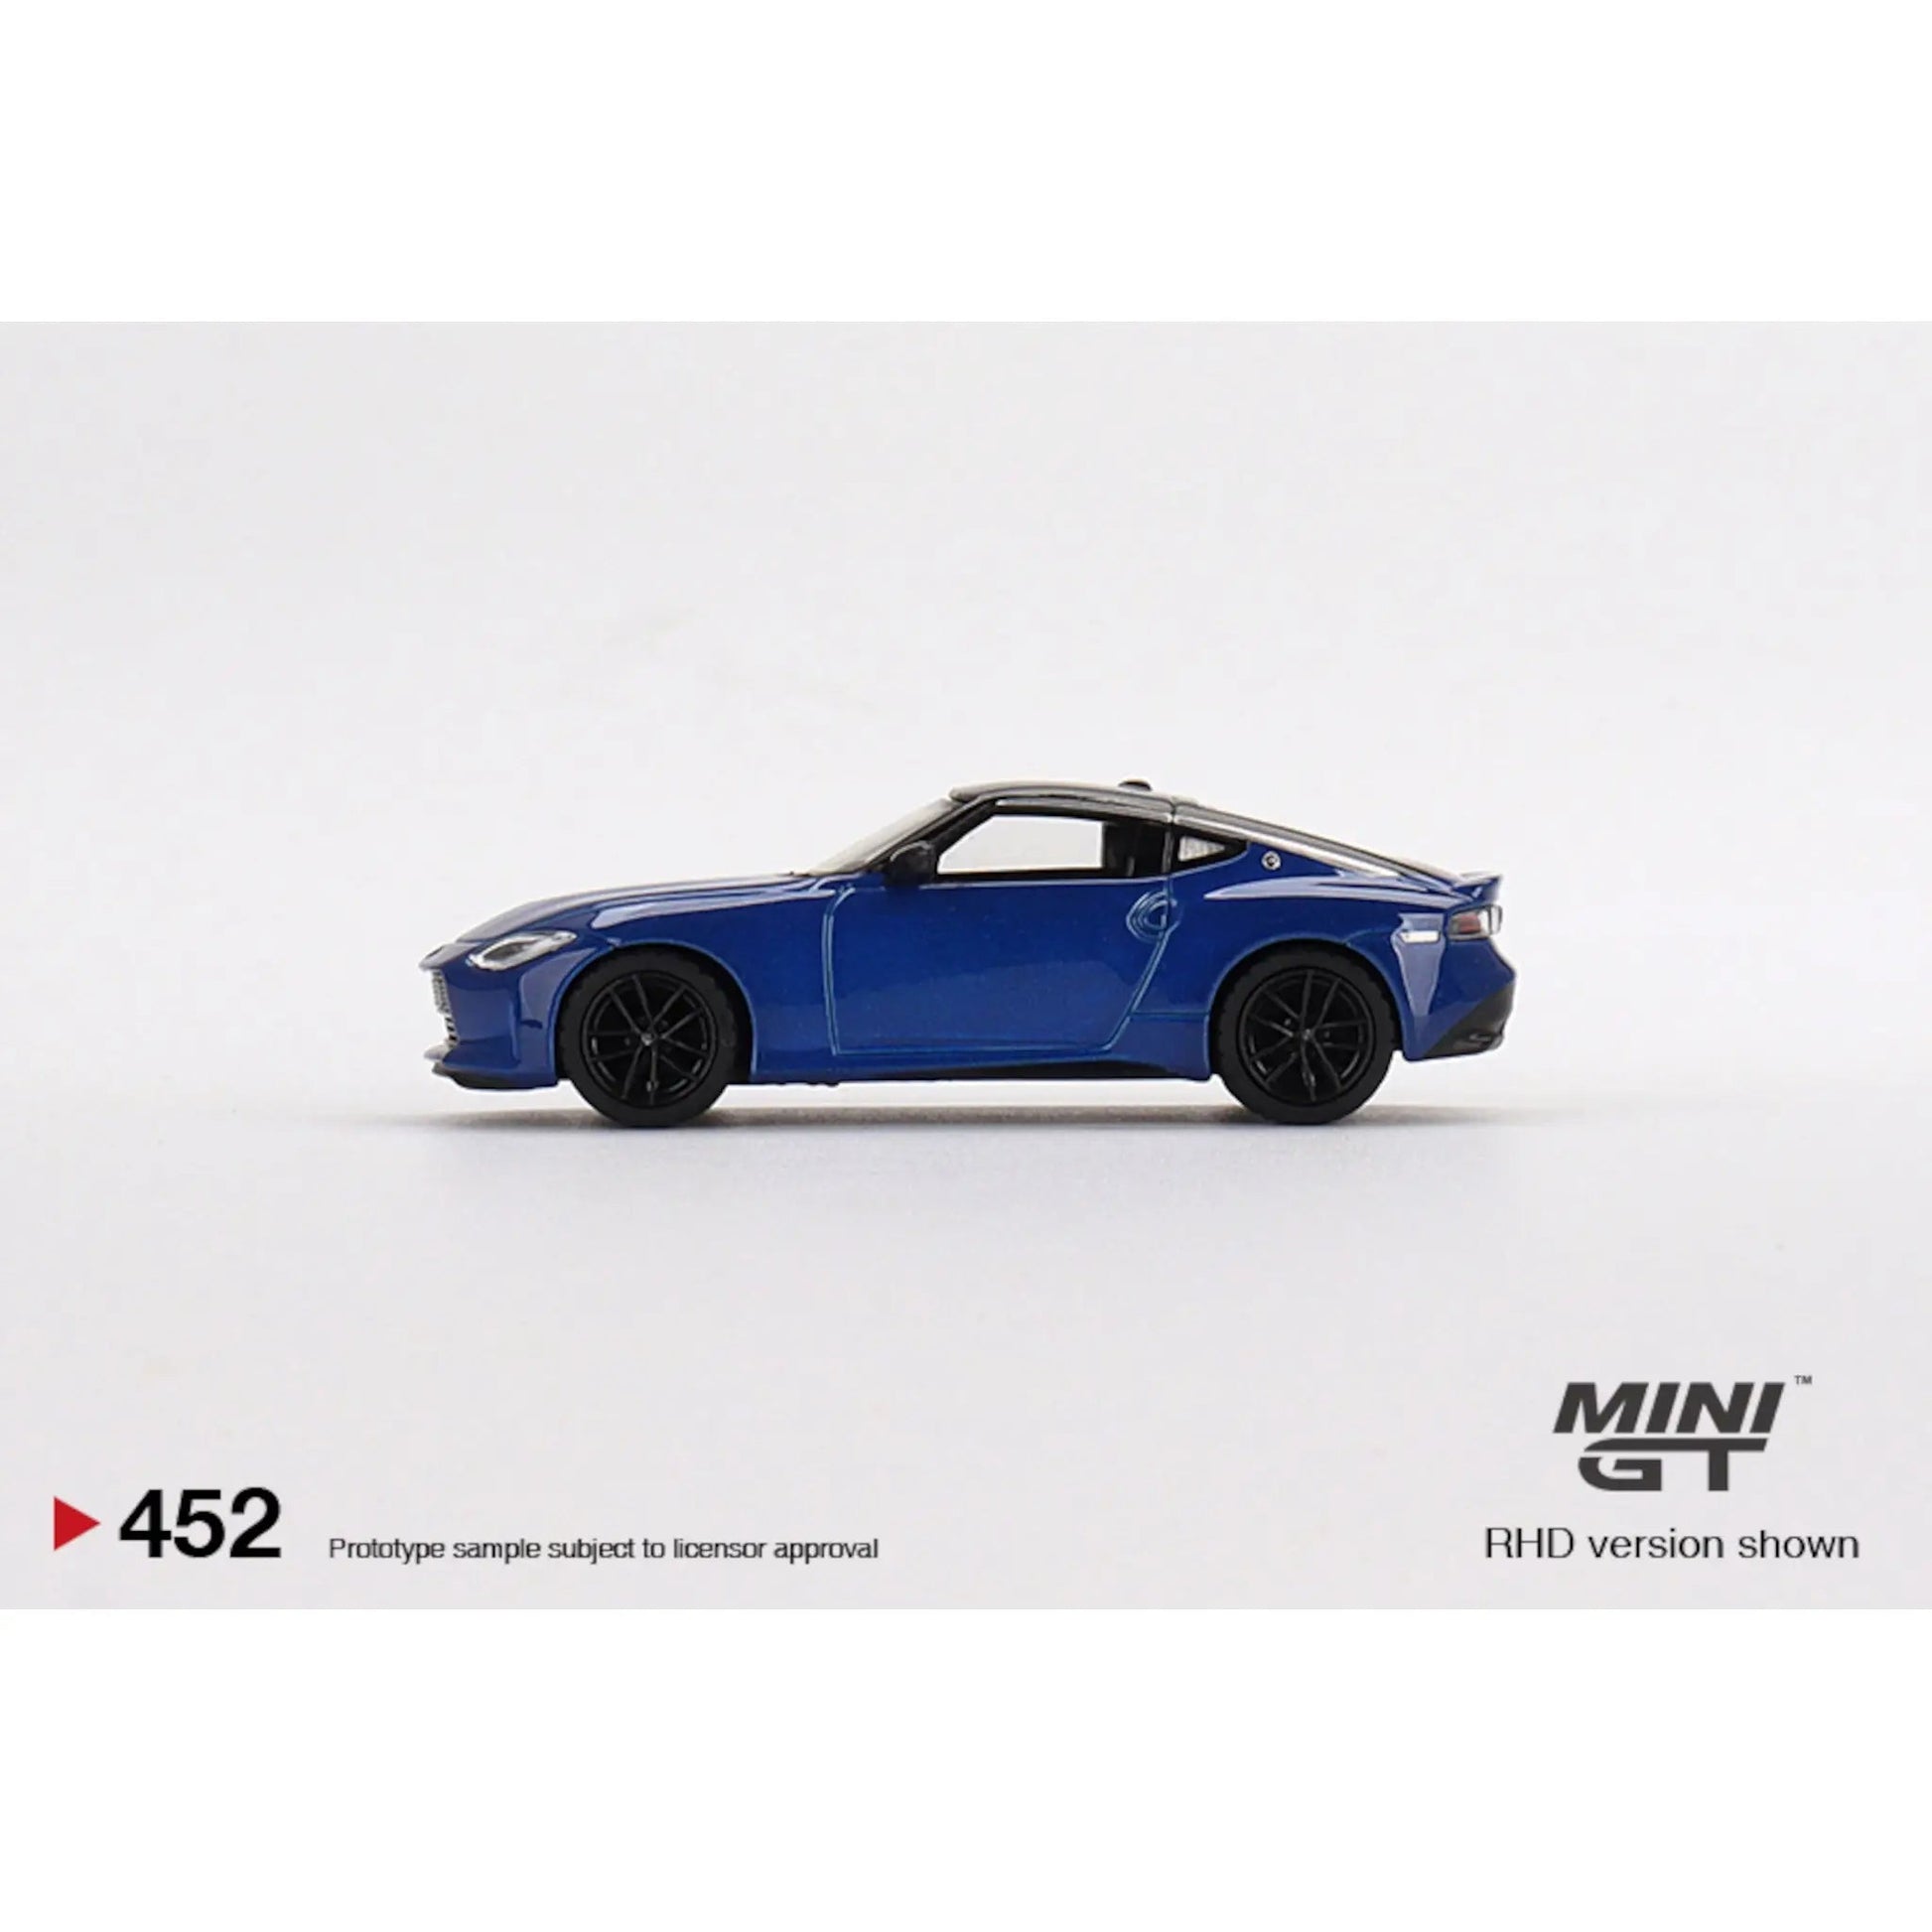 Nissan Fairlady Z Version ST 2023 seiran blue RHD Mini GT 1/64 - MGT00452rhd